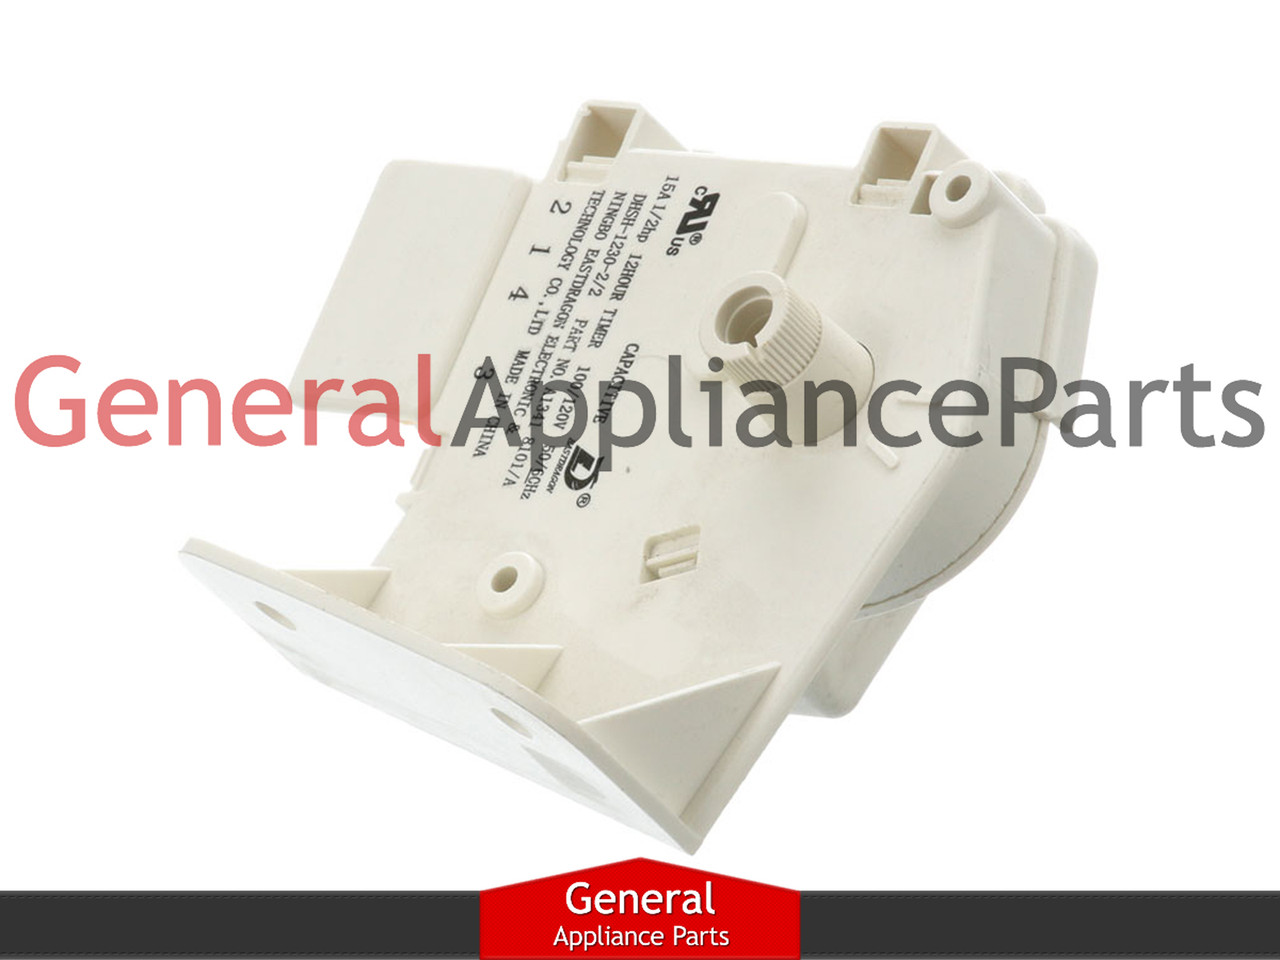 ClimaTek Refrigerator Defrost Timer replaces Electrolux # PD00045998 A1341  - General Appliance Parts